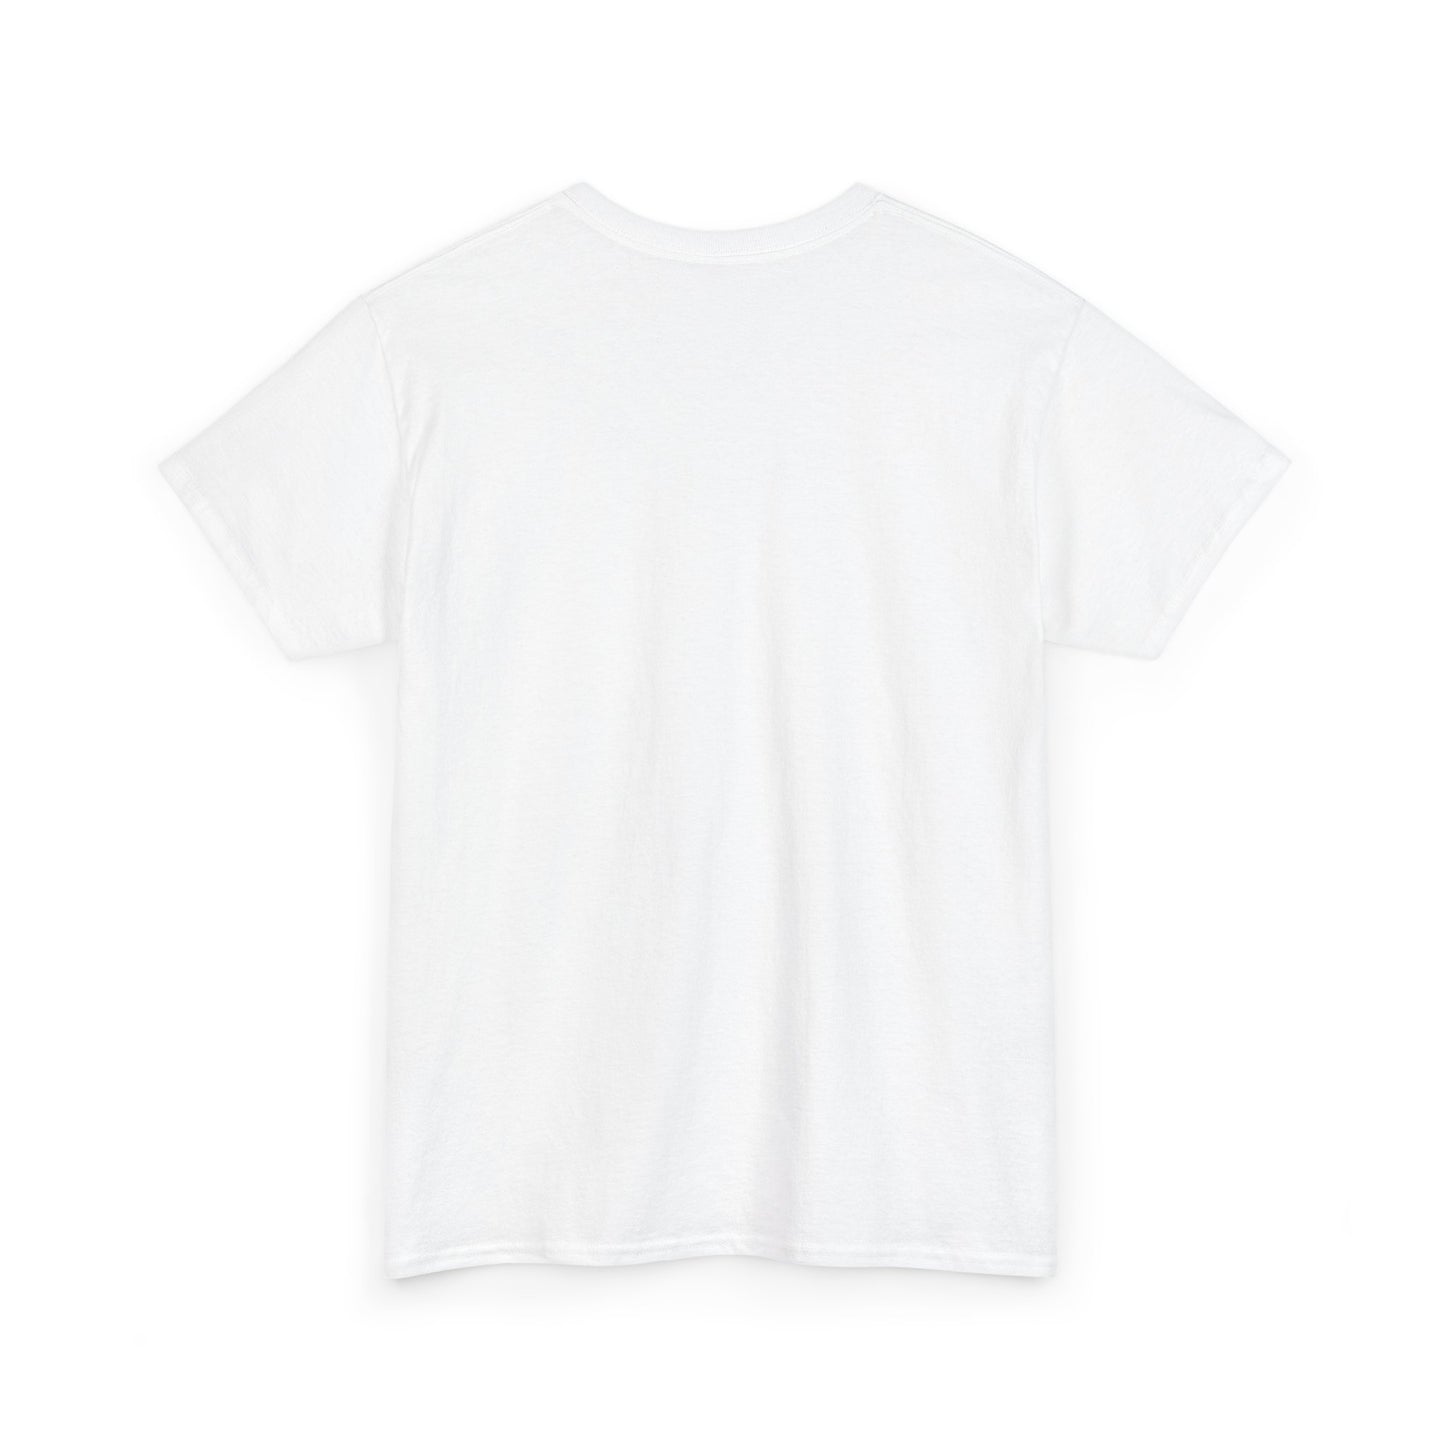 Unisex Heavy Cotton design (HEY I Got To Go) T-shirt